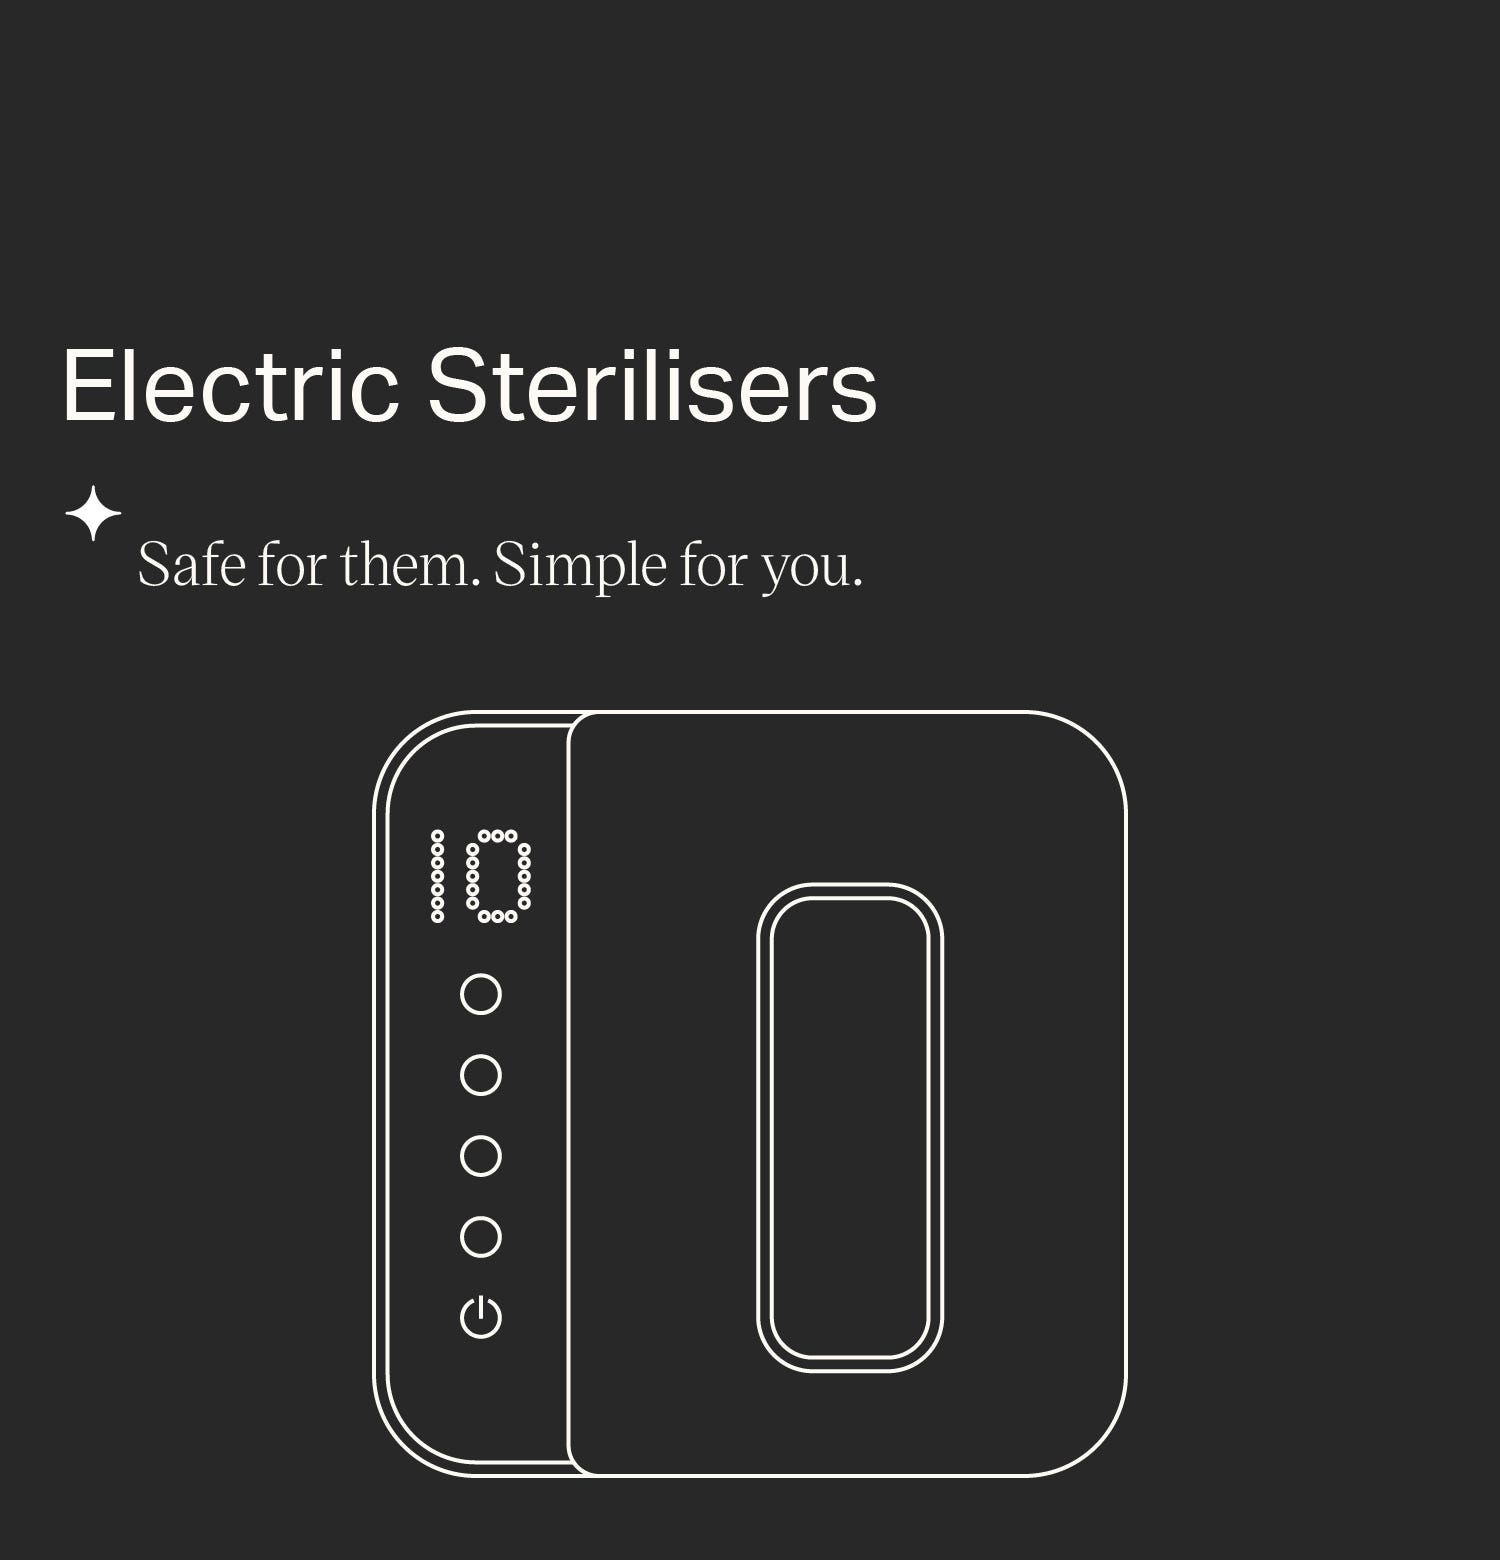 Electric Sterilisers